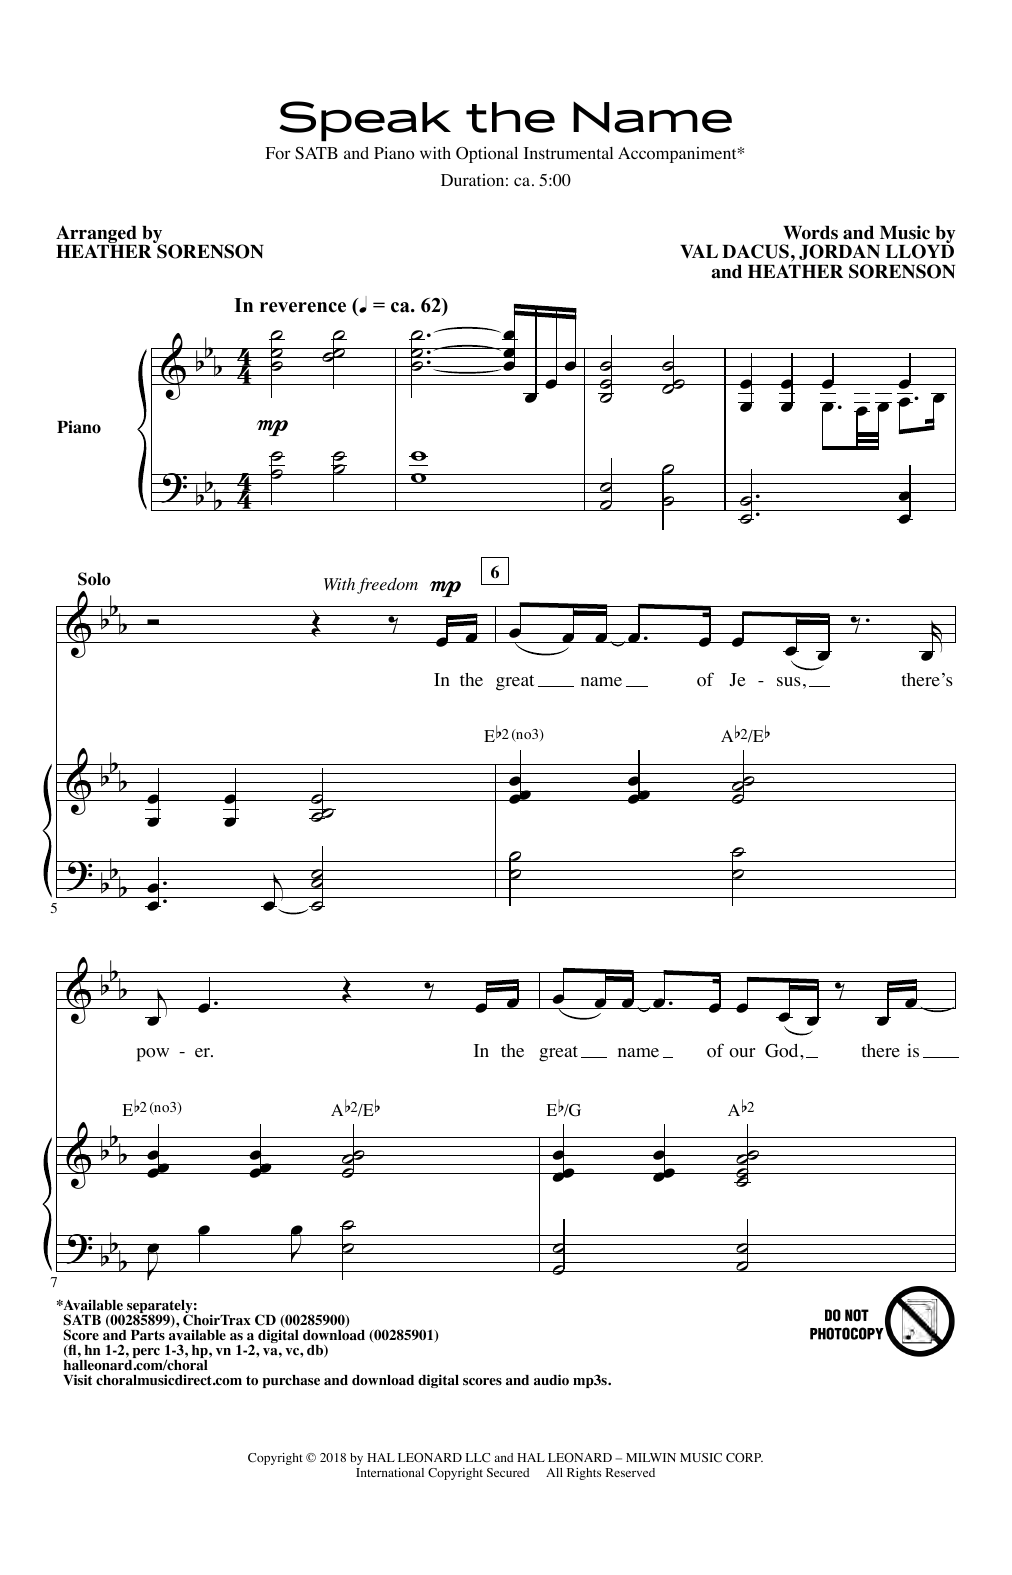 Heather Sorenson Speak The Name Sheet Music Notes & Chords for SATB Choir - Download or Print PDF